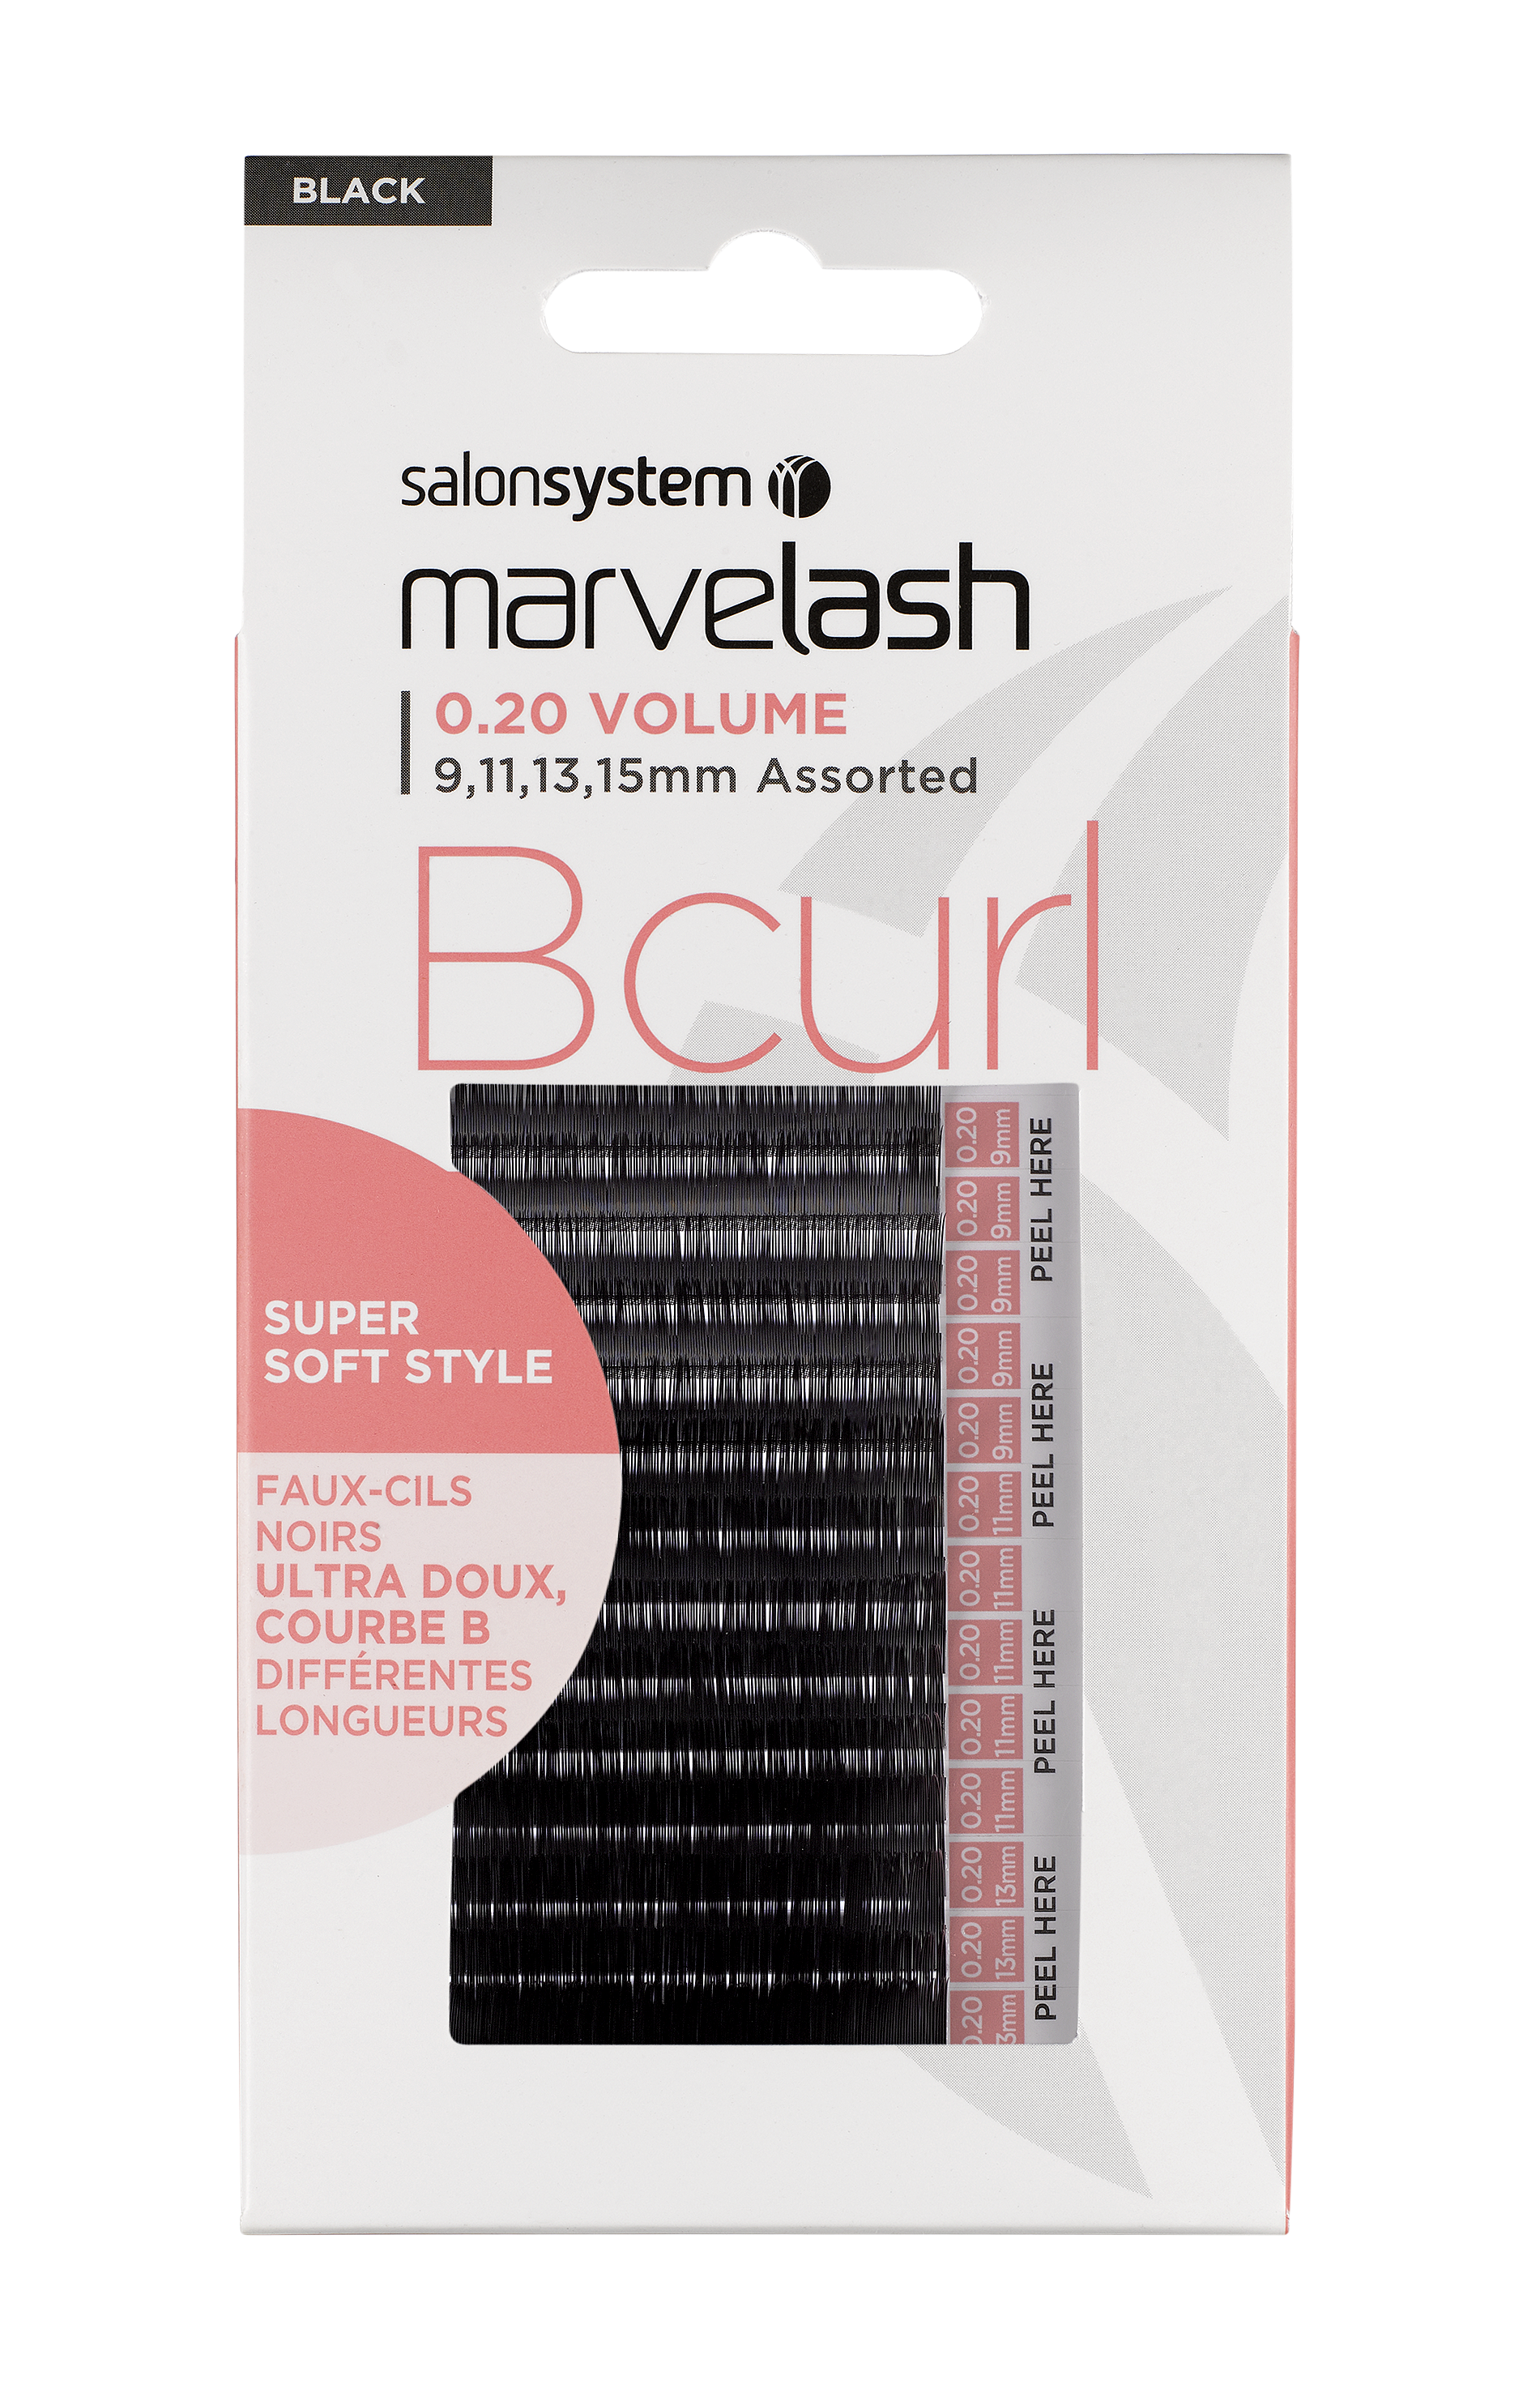 Salon System Marvelash - B CURL Lash 0.20 (Volume) Assorted black